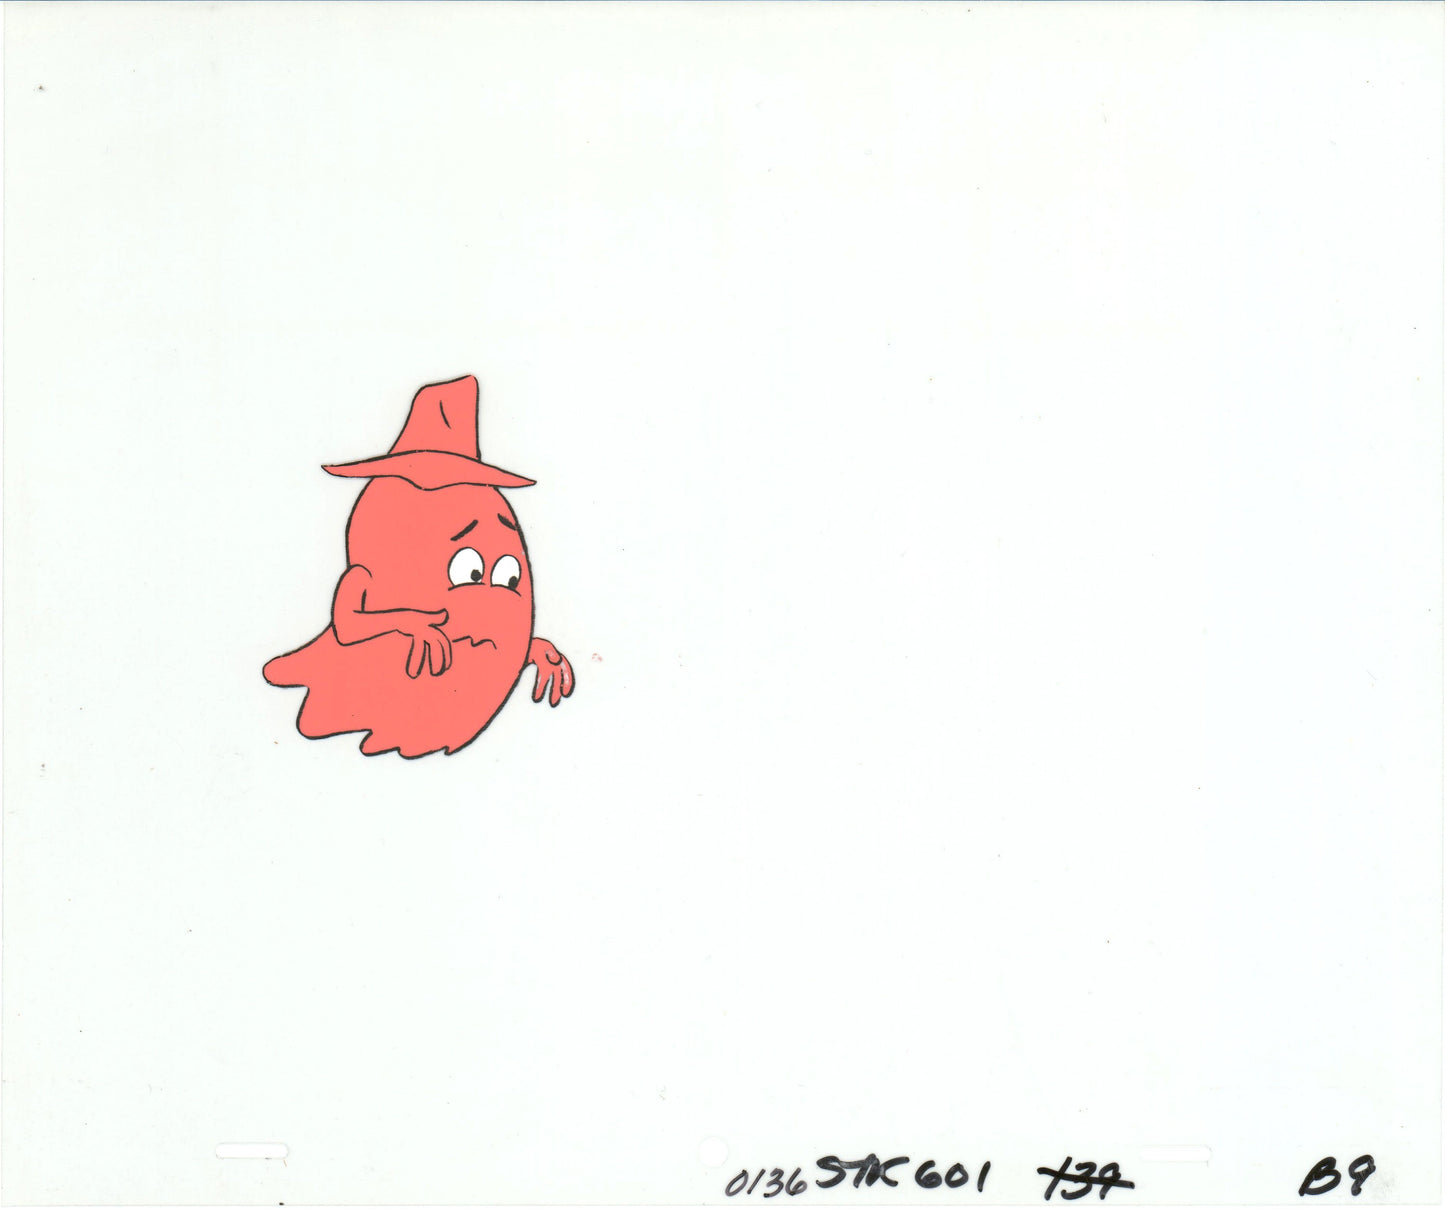 PacMan Production Animation Art Cel from Hanna Barbera 1982-83 b07344